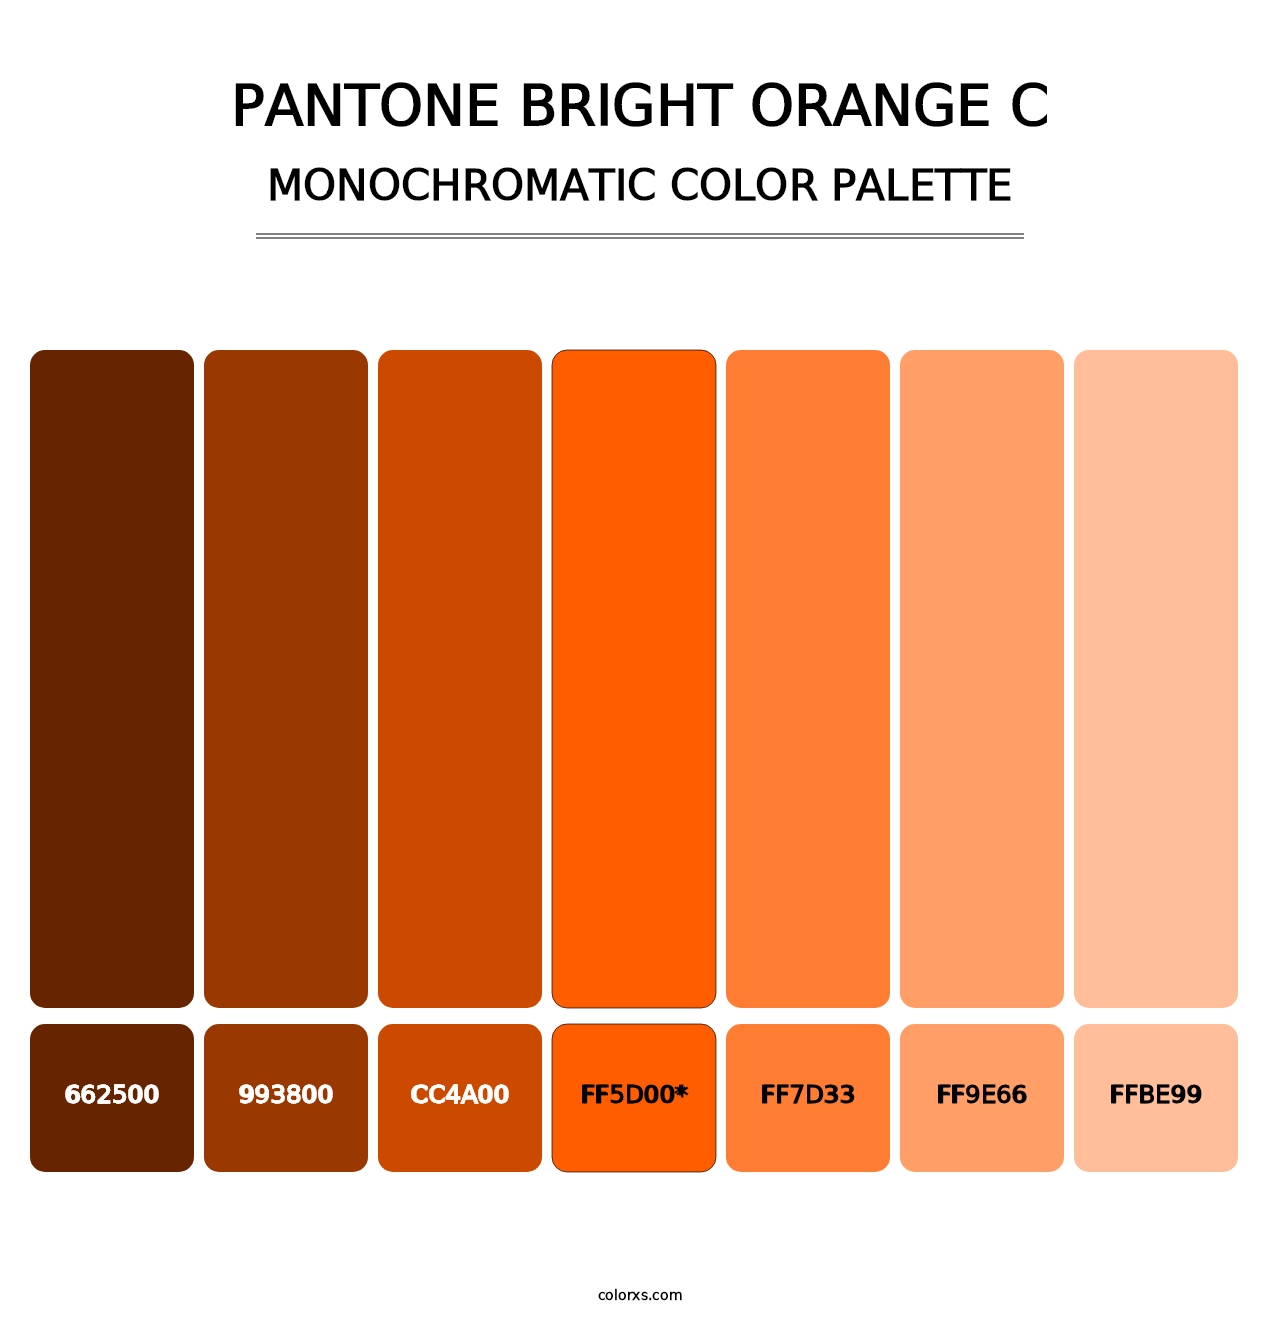 PANTONE Bright Orange C - Monochromatic Color Palette